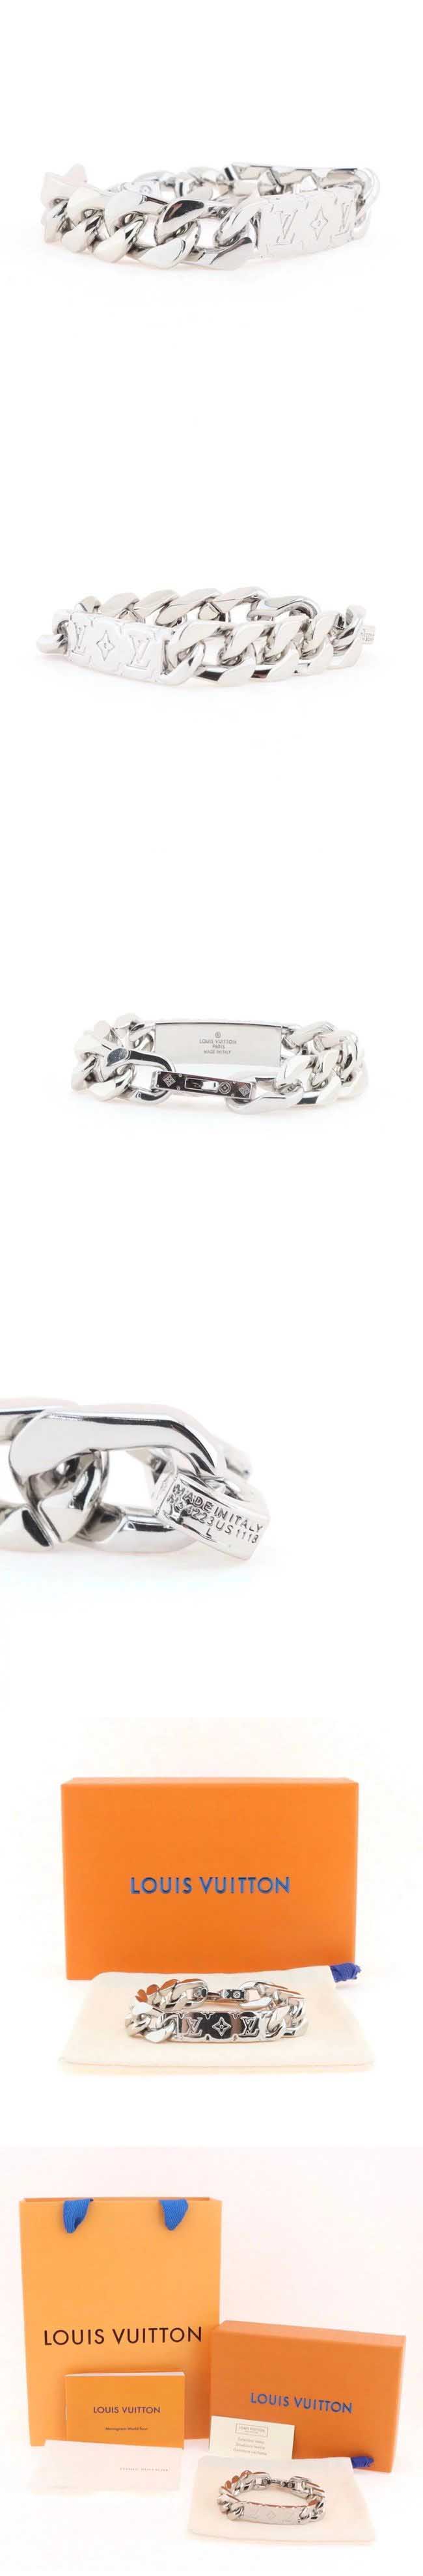 Louis Vuitton Silver Chain Monogram Bracelet ルイヴィトン シルバー チェーン モノグラム ブレスレット